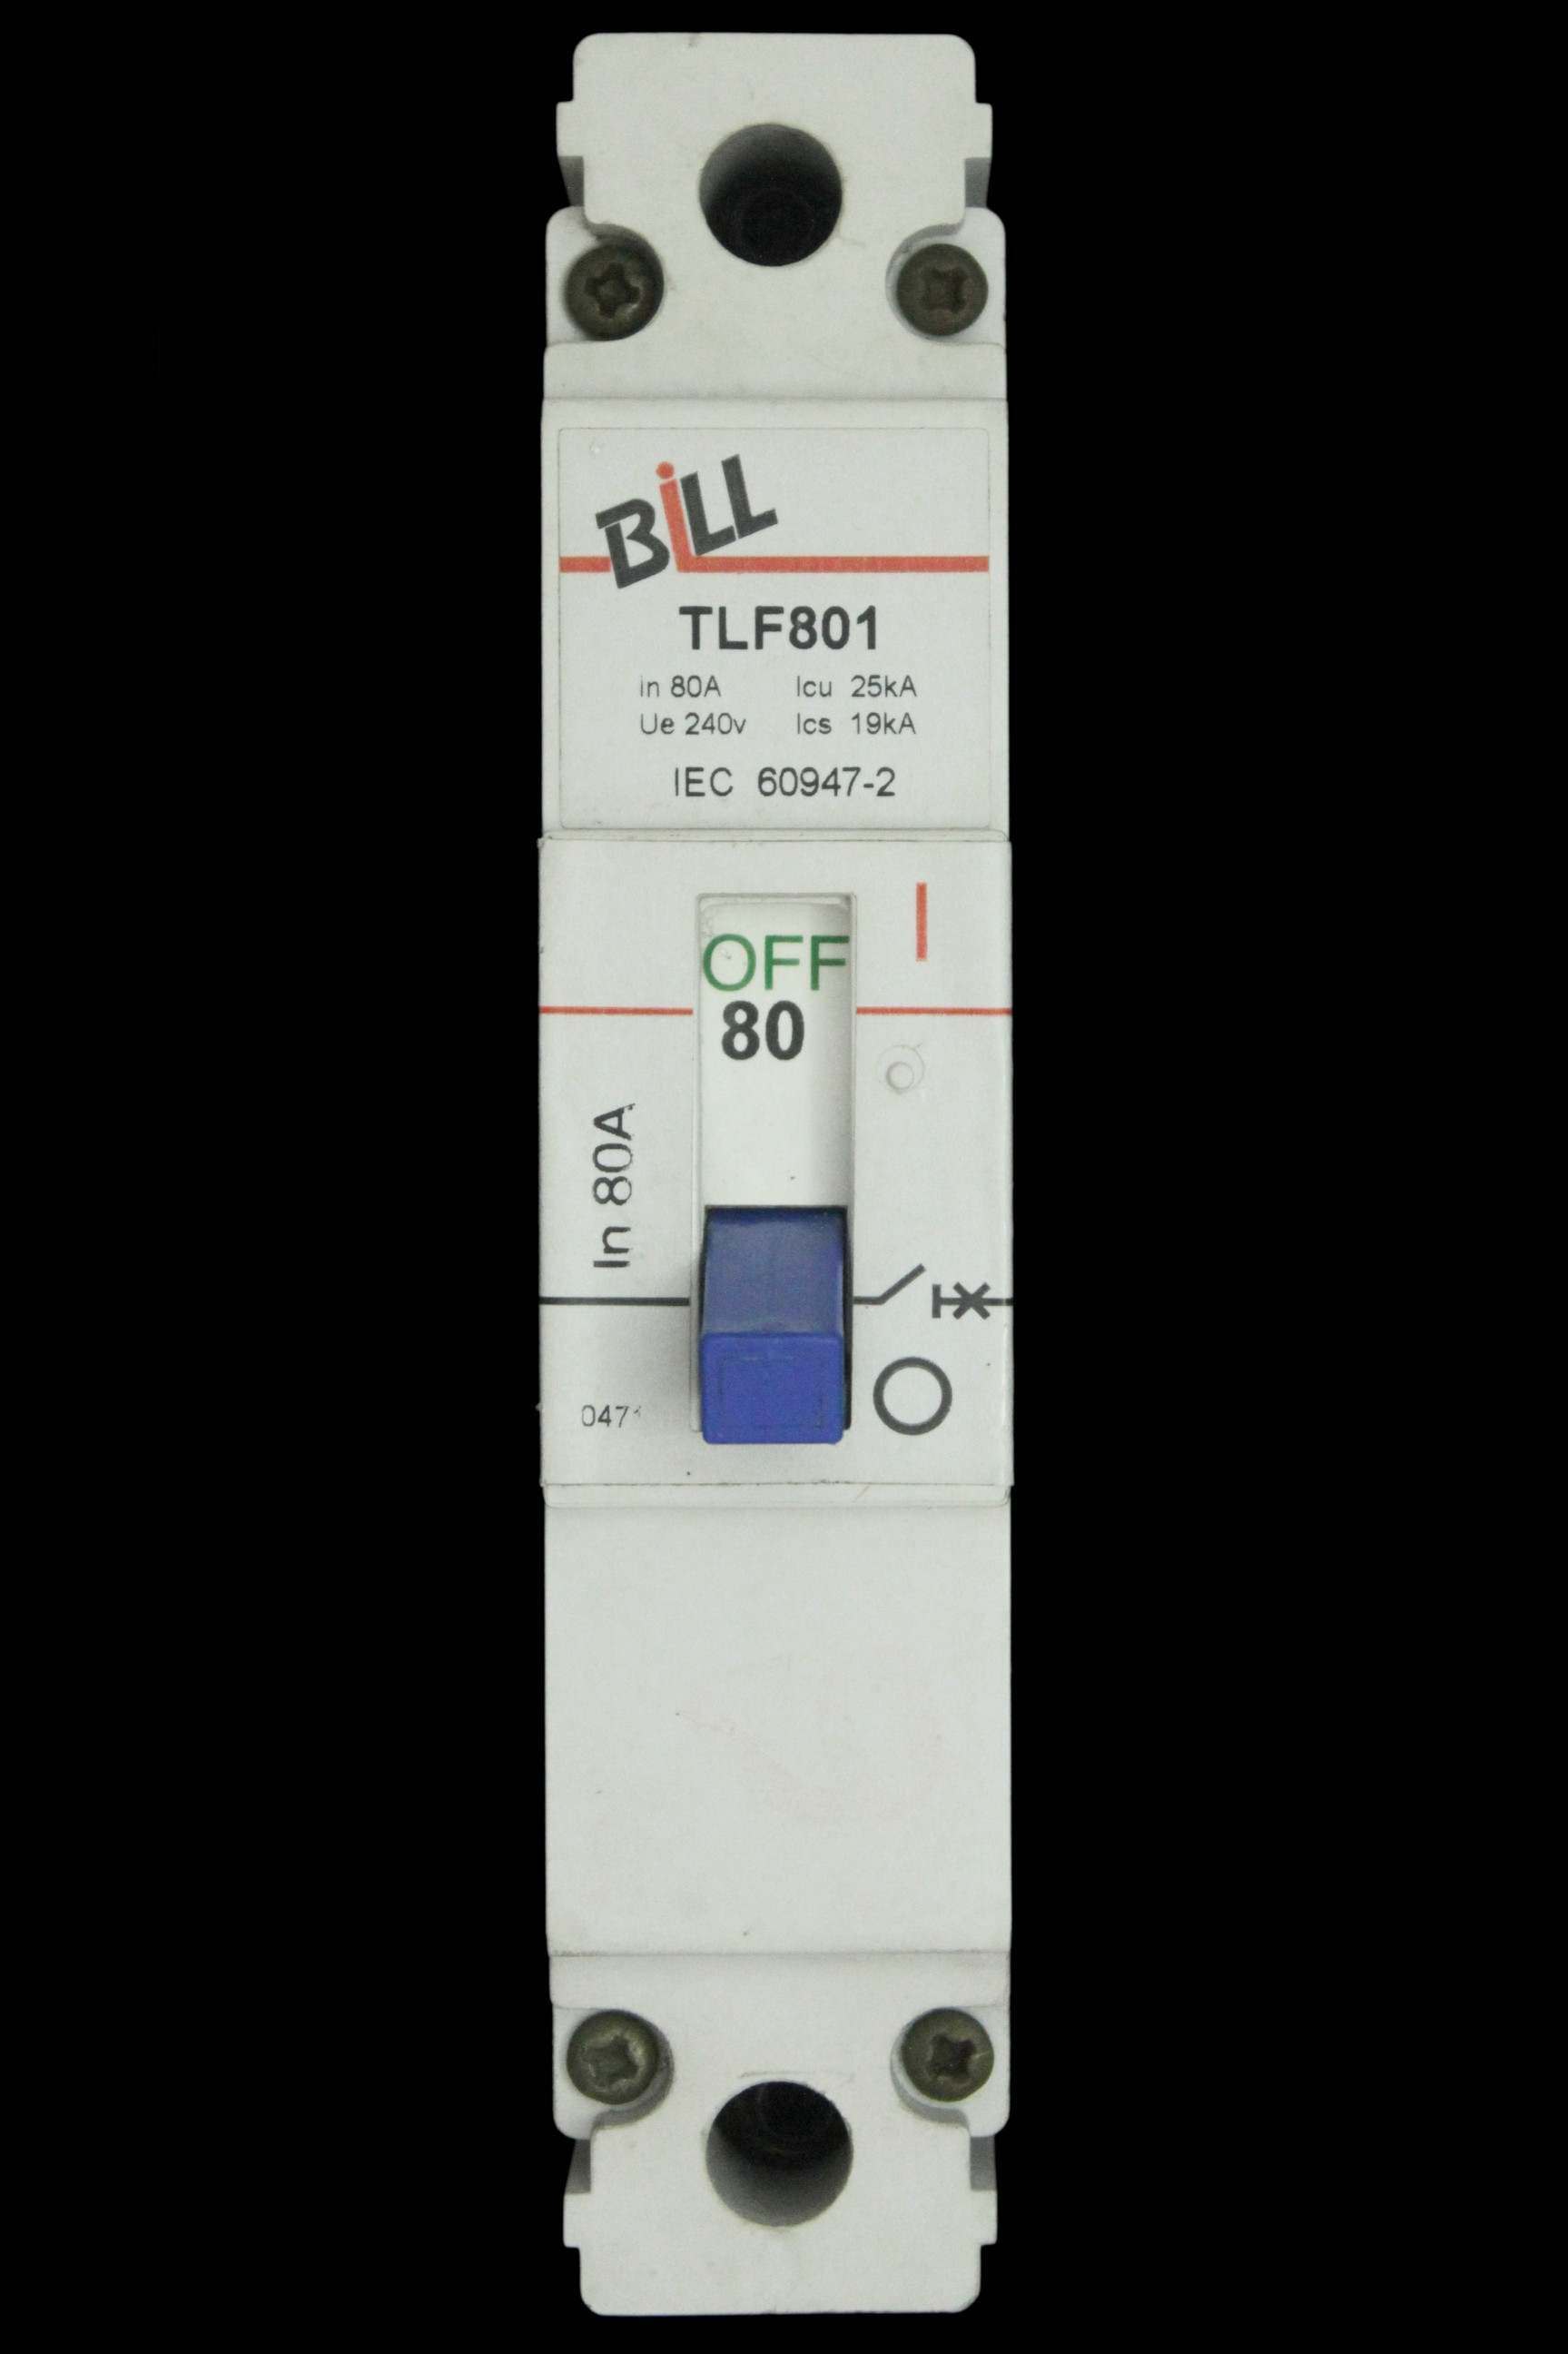 BILL 80 AMP 25kA MCCB TLF801